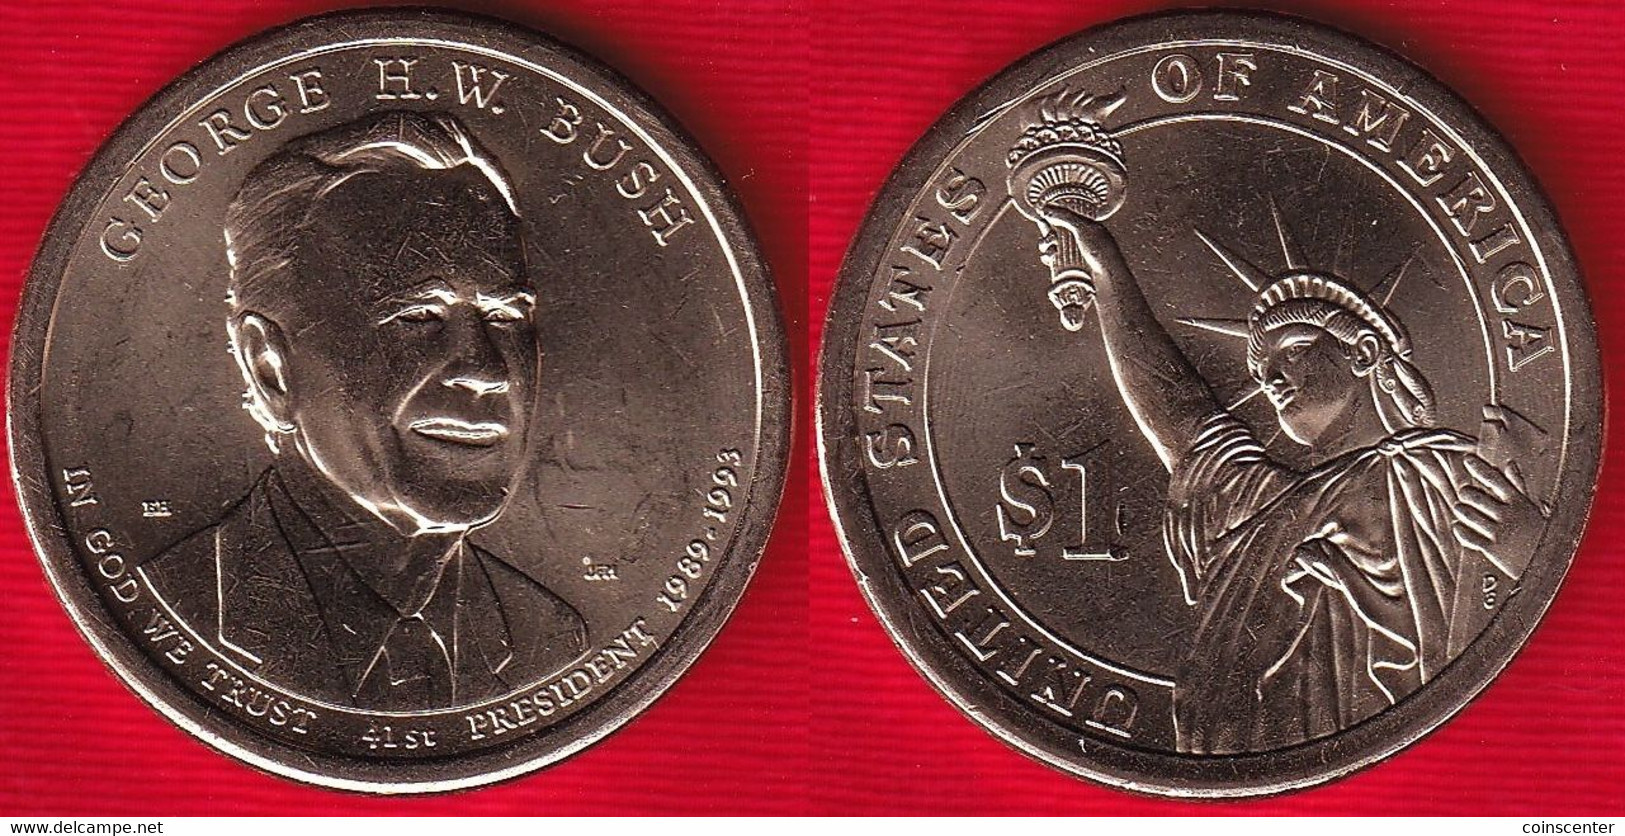 USA 1 Dollar 2020 P Mint "George H. W. Bush" UNC - 2007-…: Presidents